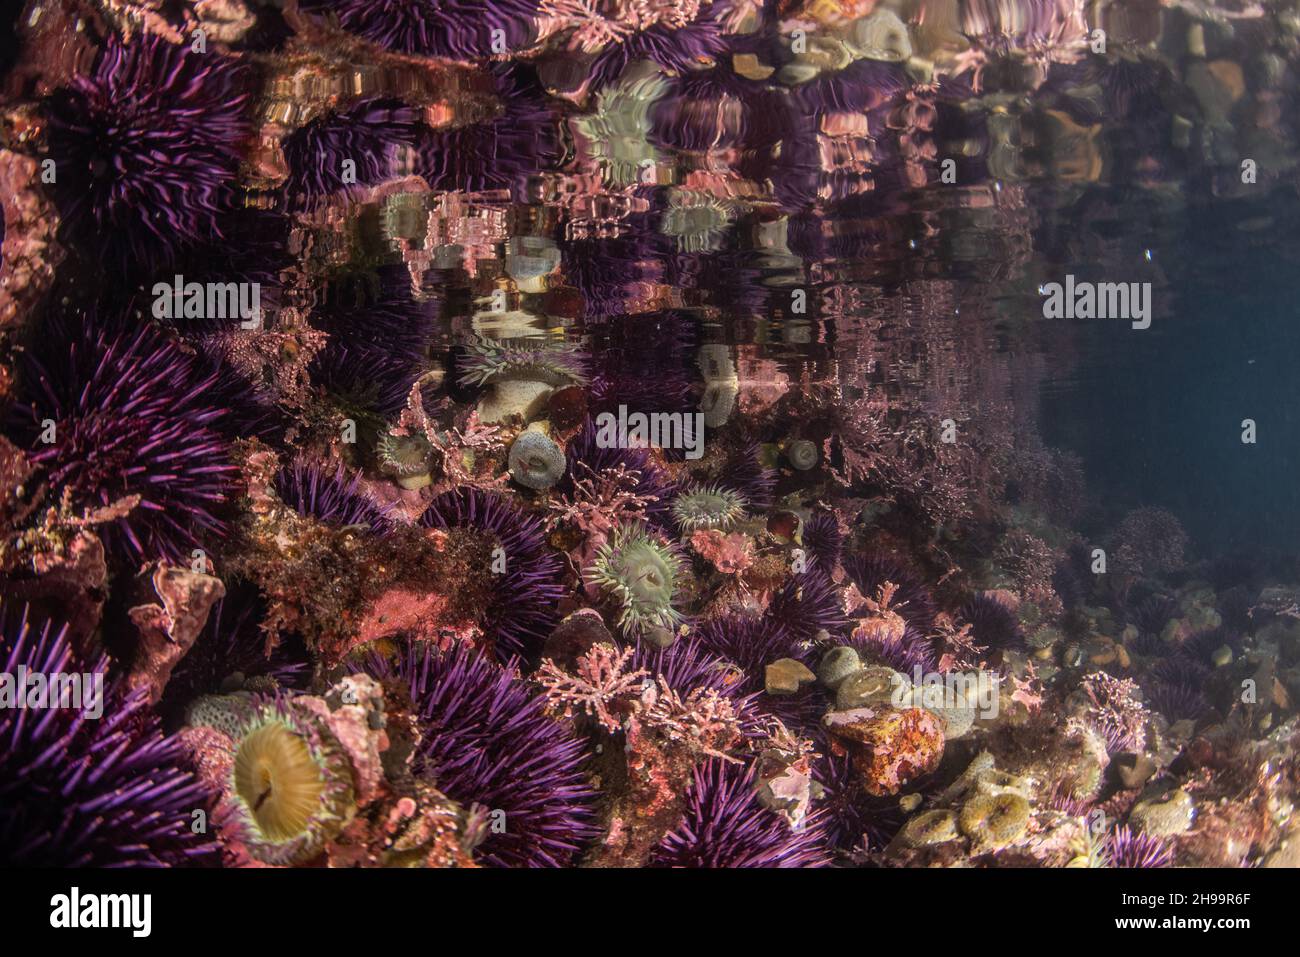 Large aggregations of Pacific purple sea urchins (Strongylocentrotus purpuratus) in coastal tidepools in Fitzgerald marine reserve in California. Stock Photo